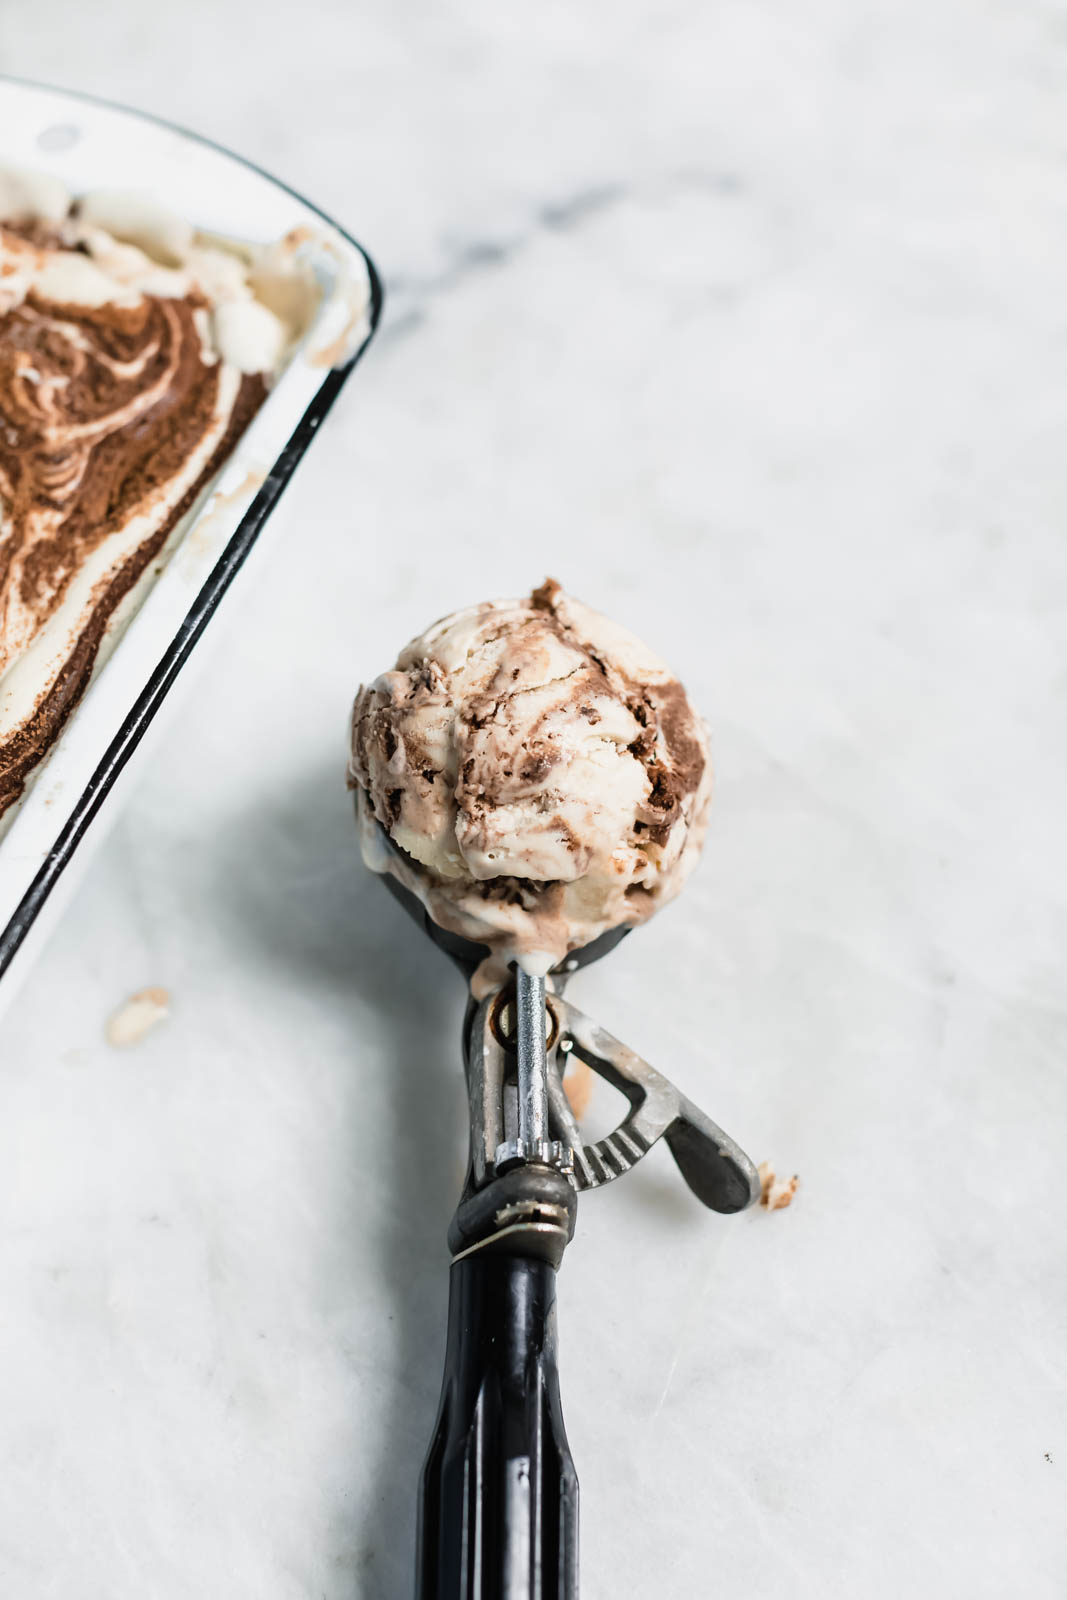 scoop of Vegan Peanut Butter Mudslide Ice Cream